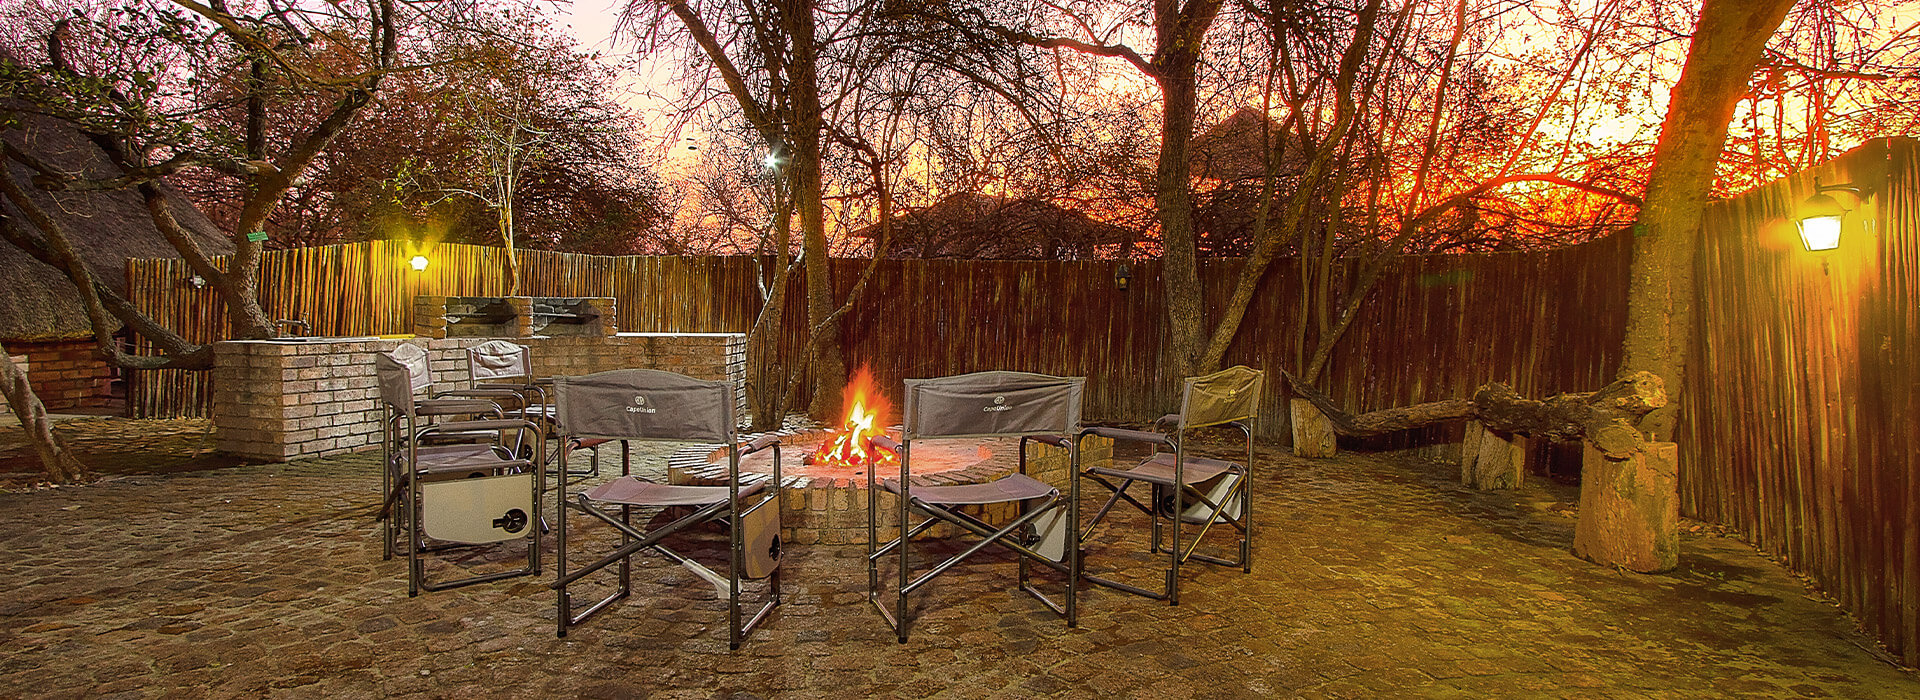 Nyati Safari Bushcamp fire pit and surrounding chairs